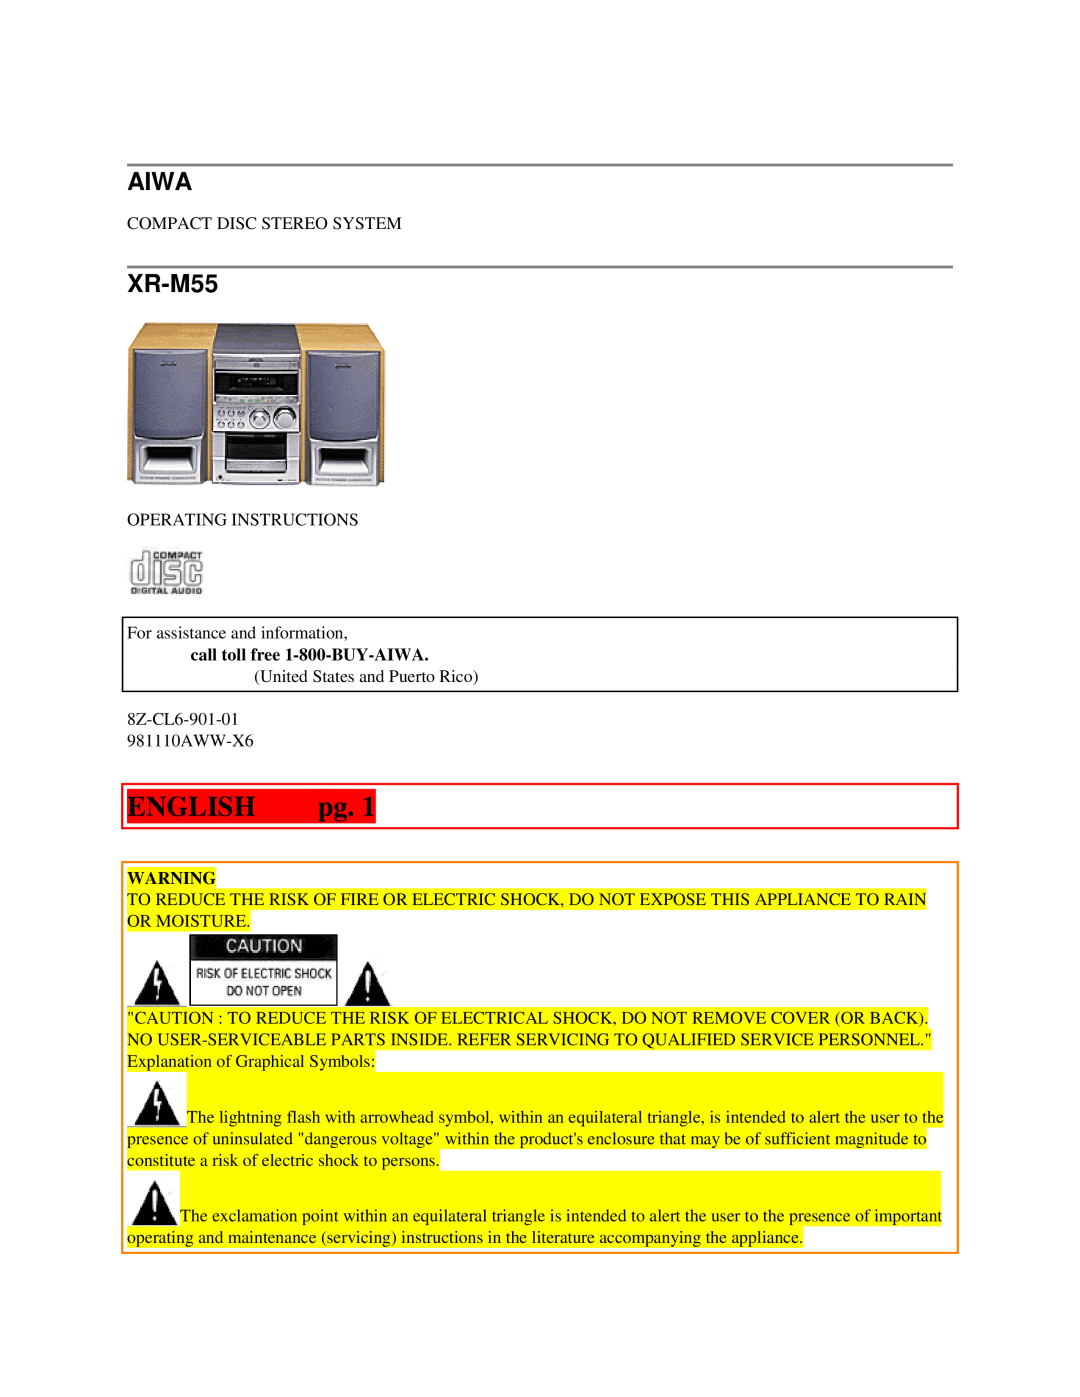 Aiwa XR-M55 operating instructions English, Aiwa, call toll free 1-800-BUY-AIWA 